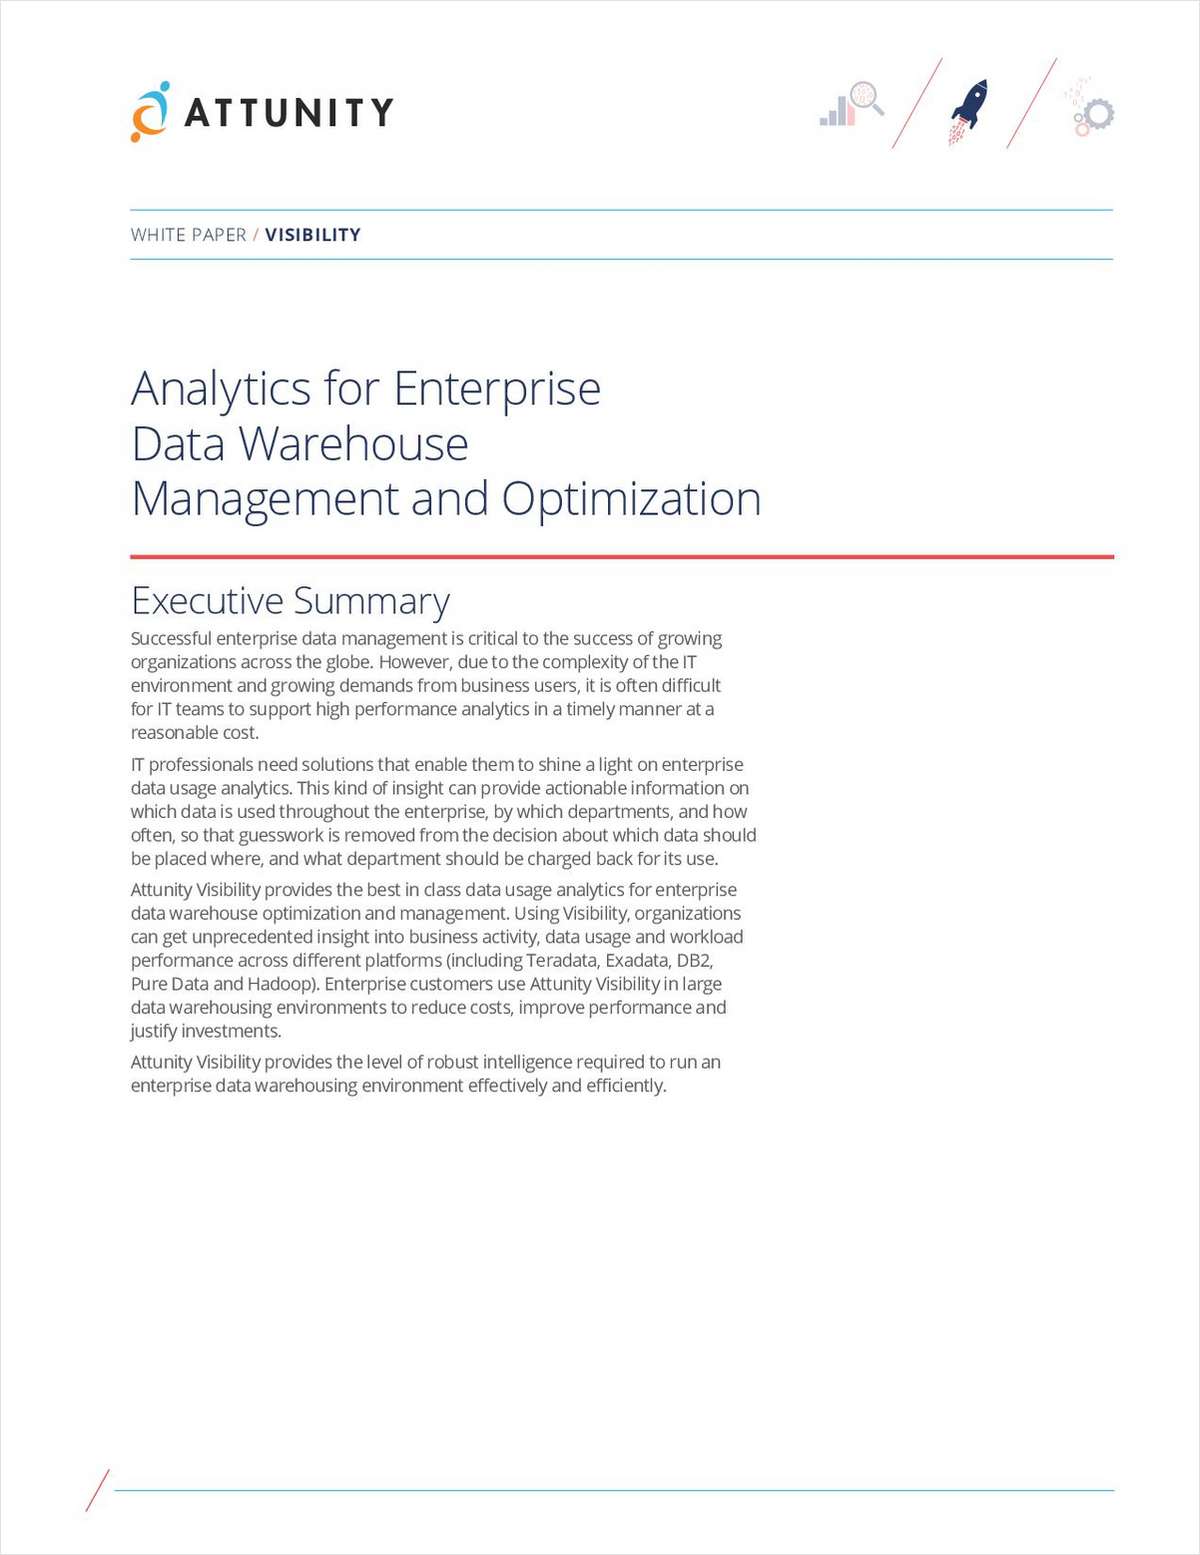 Analytics for Enterprise Data Warehouse Management and Optimization